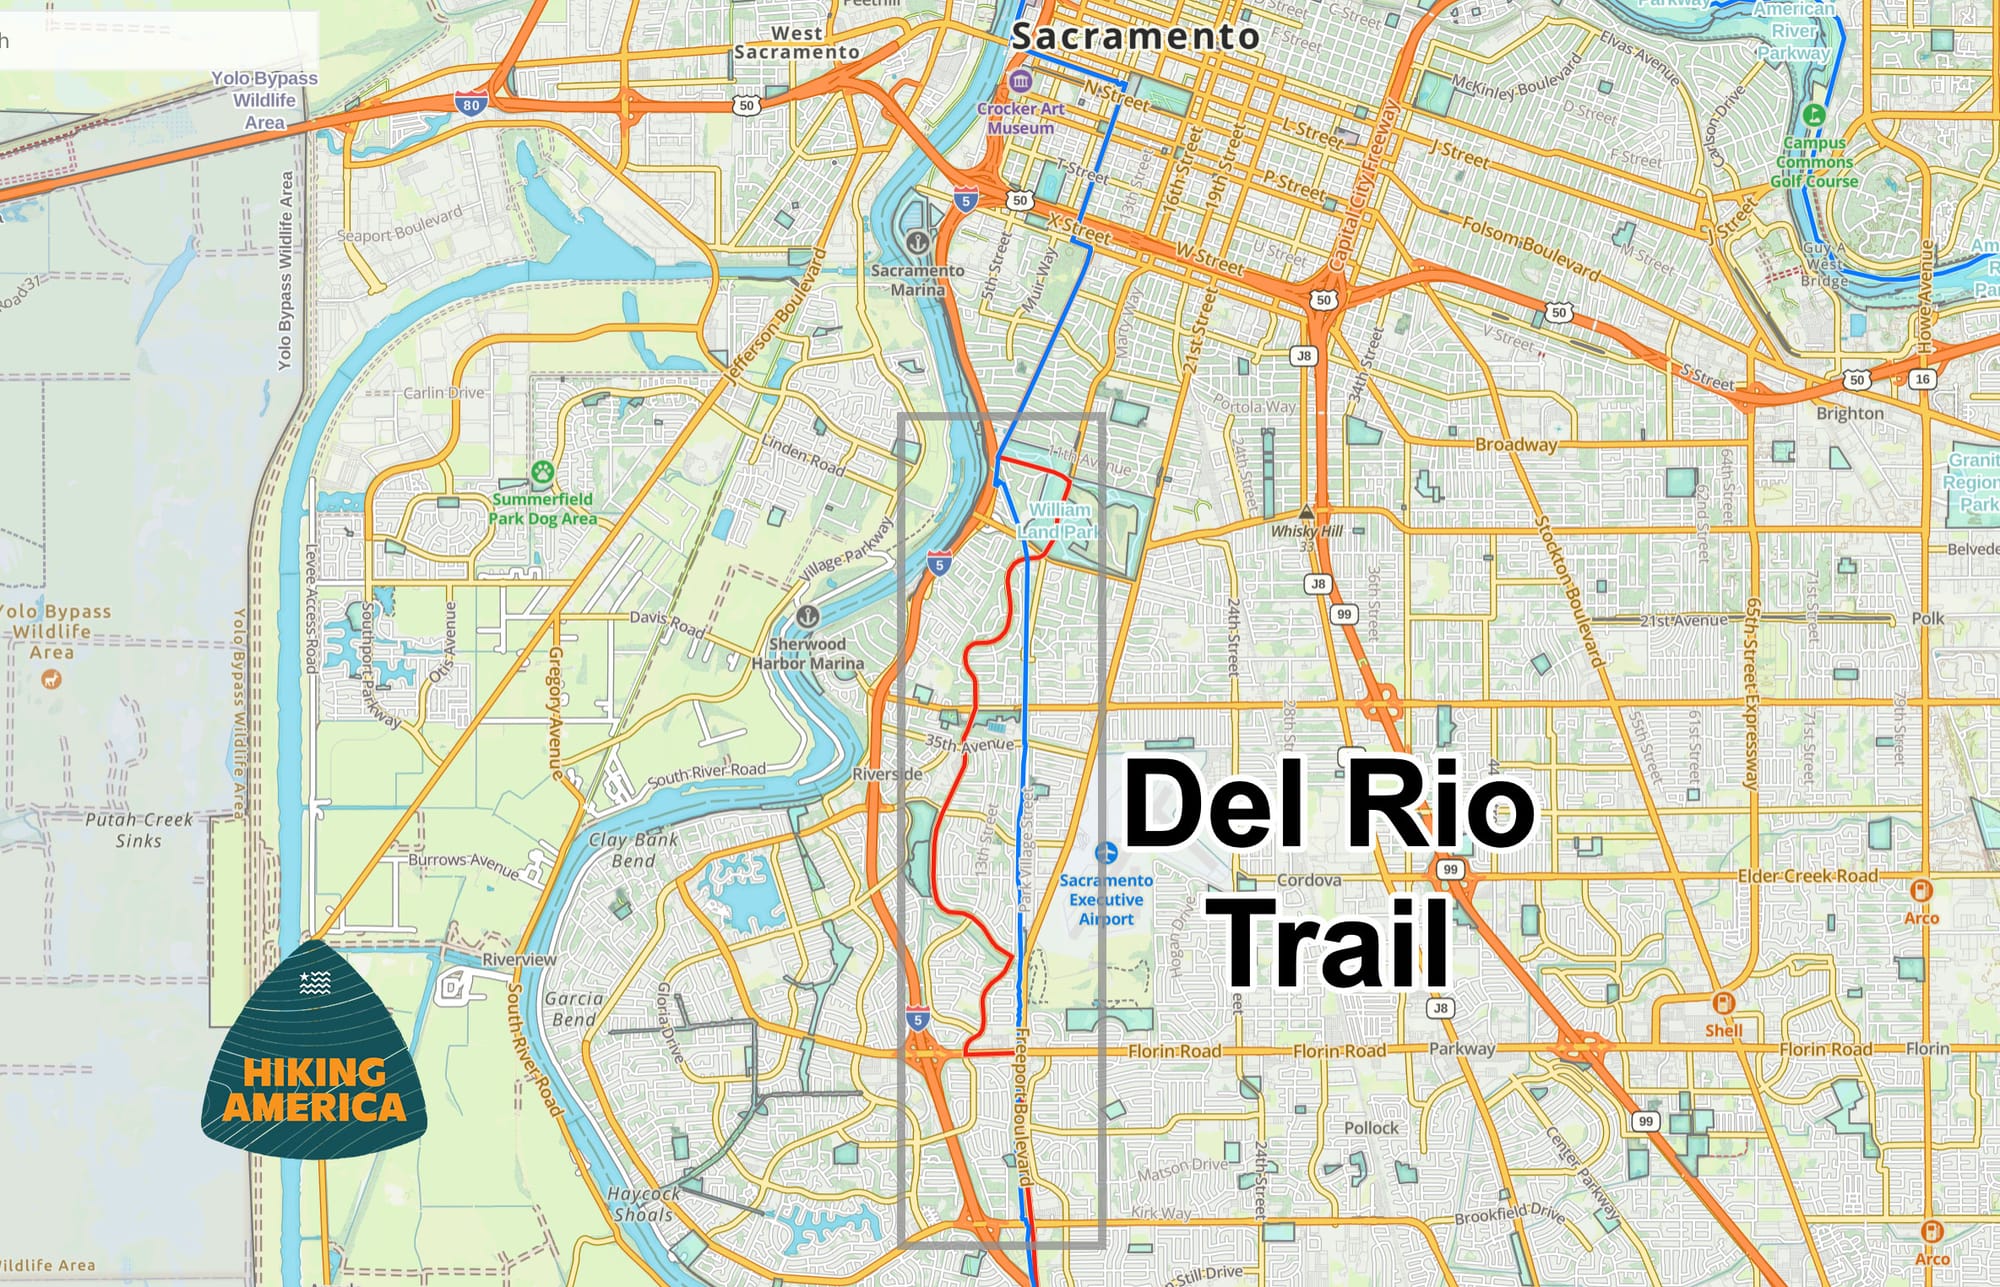 Del Rio Trail: Sacramento’s New Pathway along the American Discovery Trail